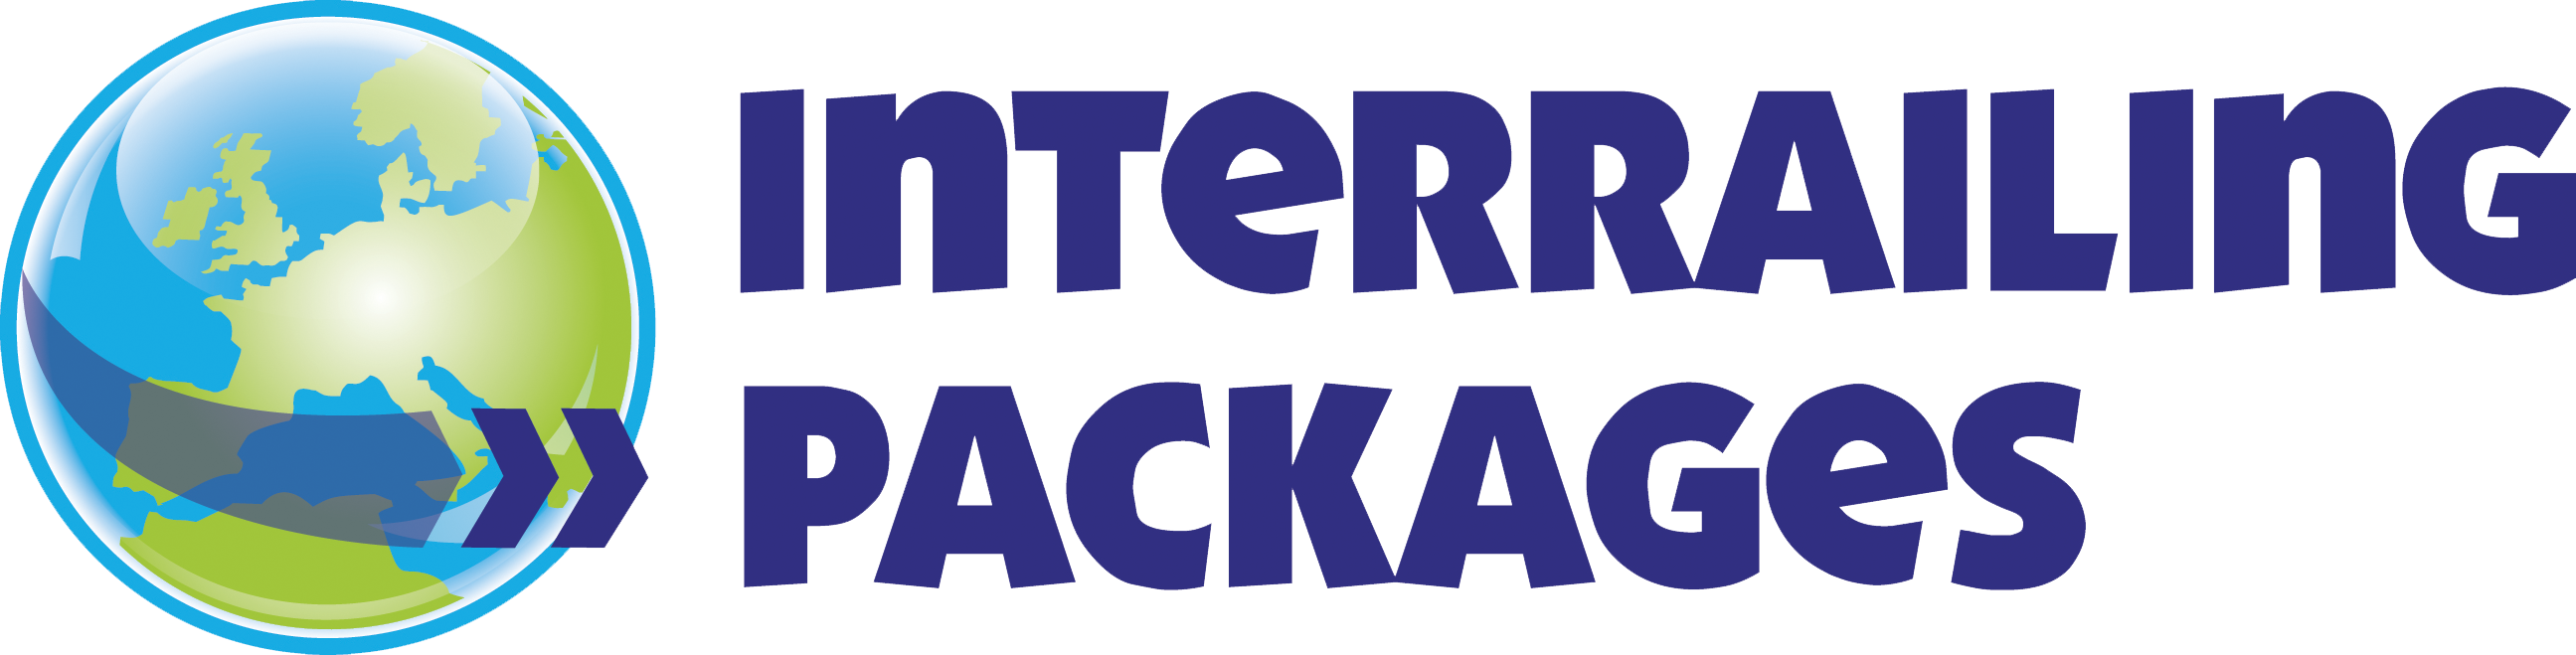 Interrailing Packages Ltd